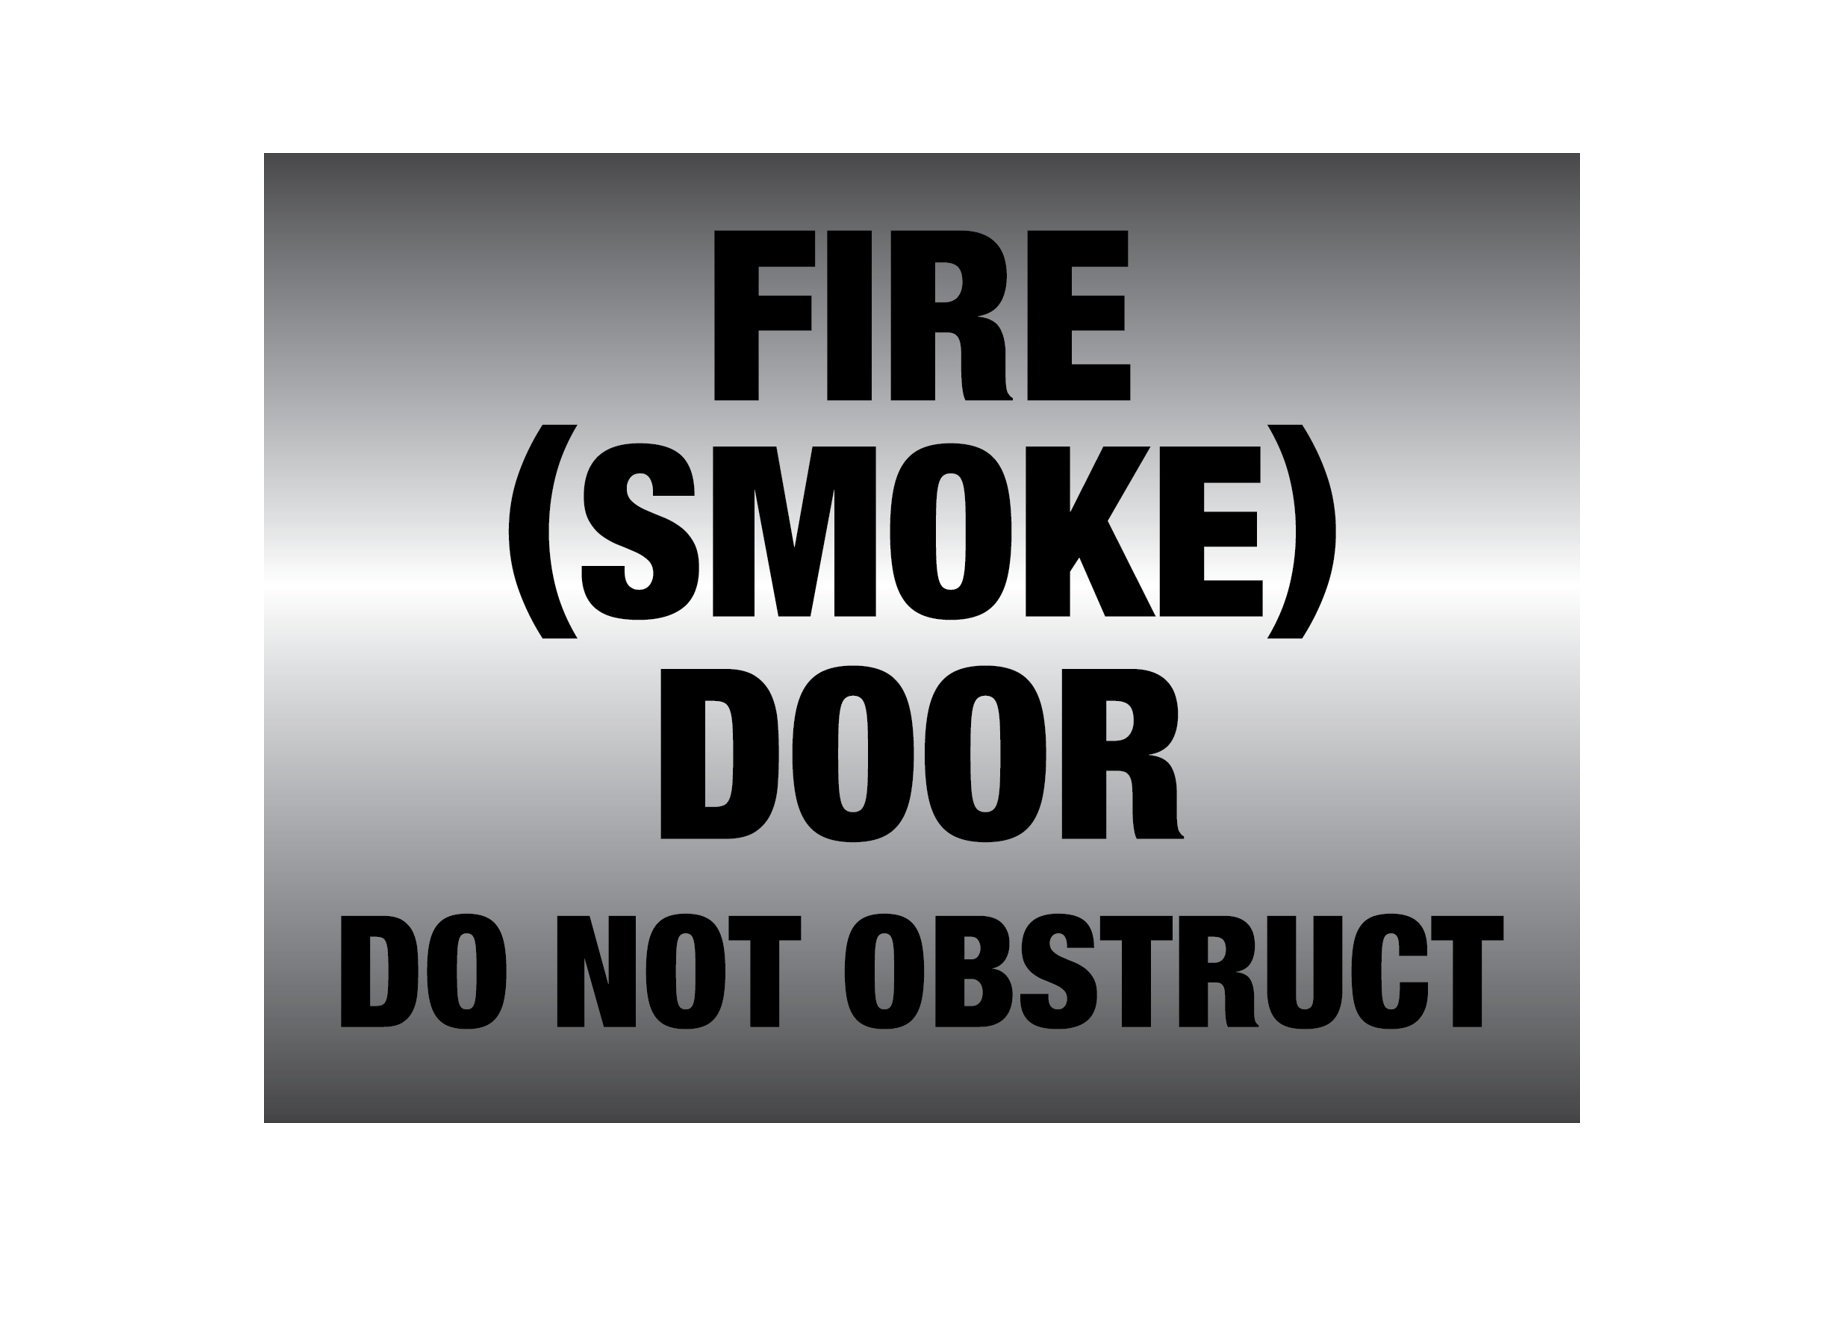 Metal finish PVC Fire smoke door do not obstruct Sign - Premium  from Firebox - Shop now at Firebox Australia